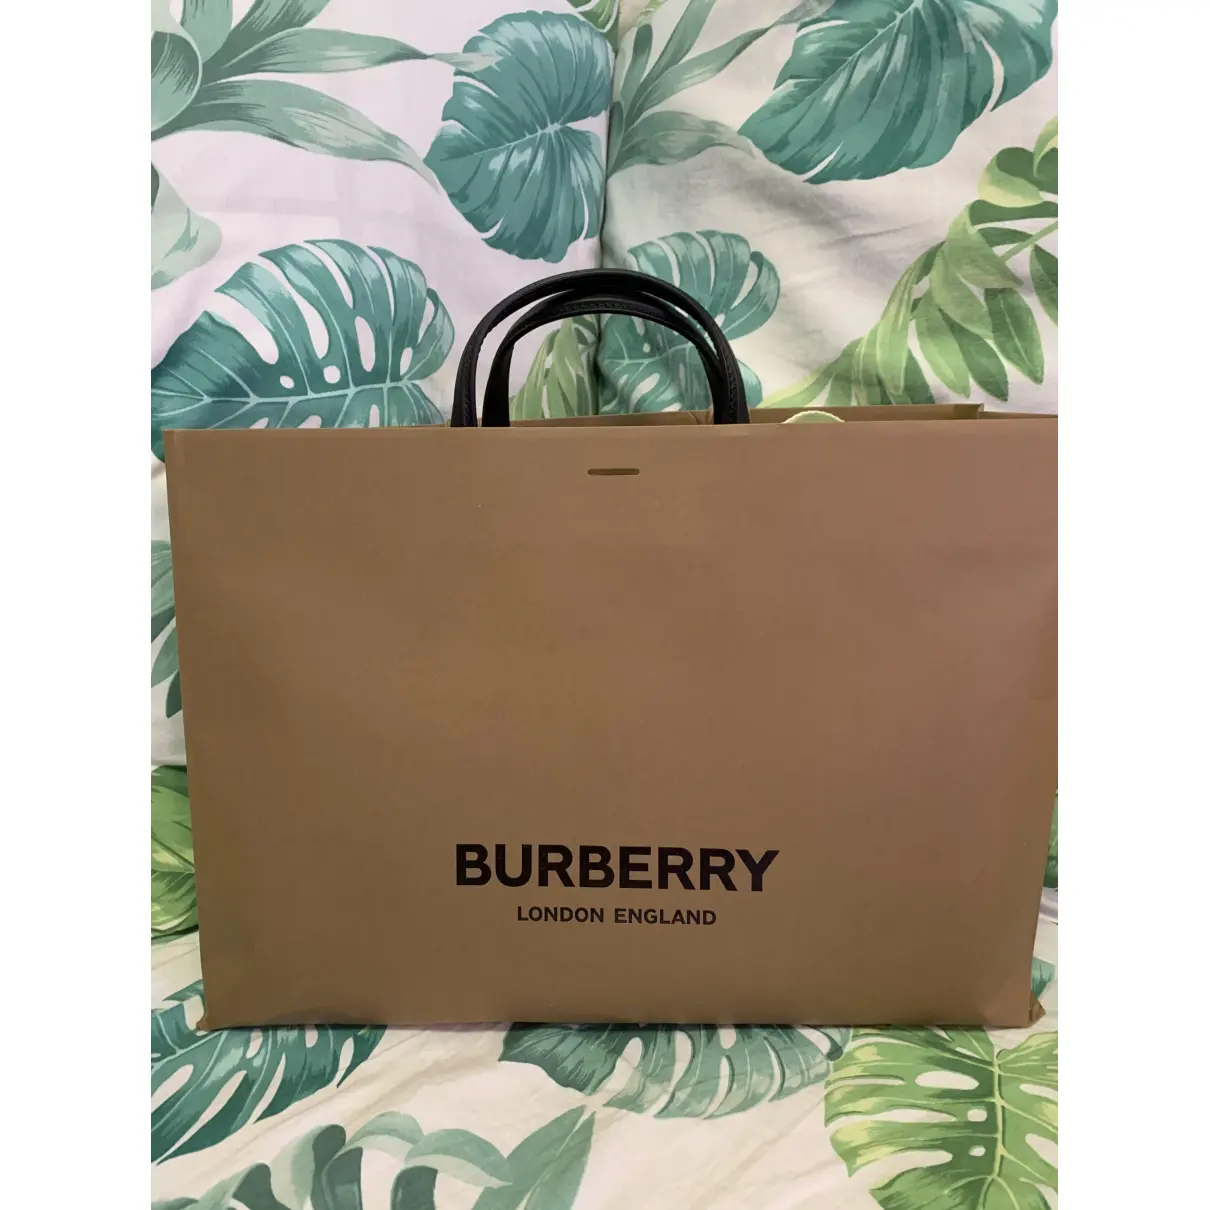 Buy Burberry The Banner  leather handbag online